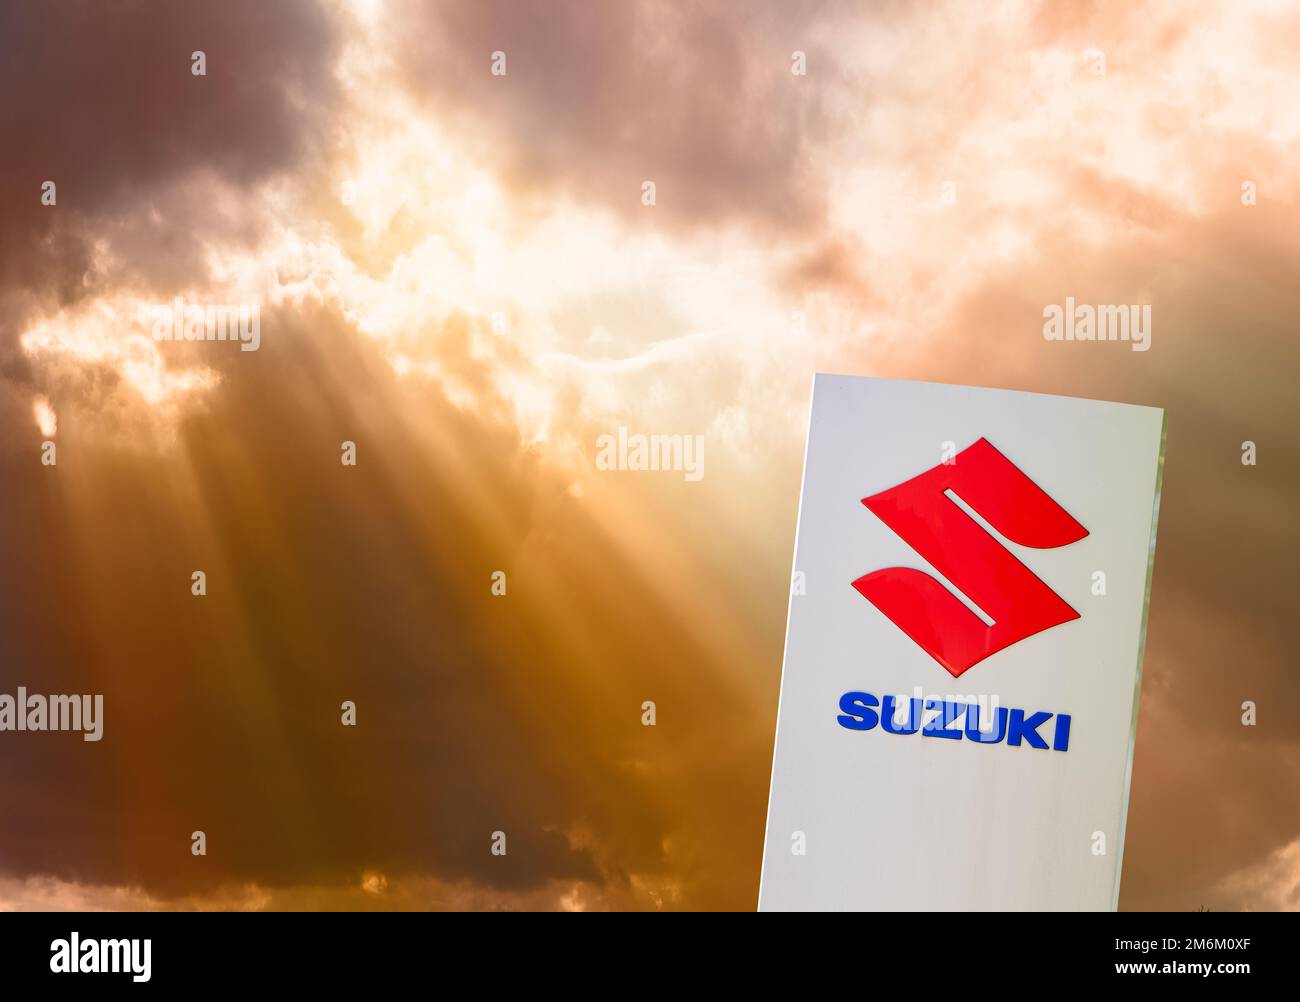 Maruti suzuki car logo editorial stock image. Image of mobile - 96202659